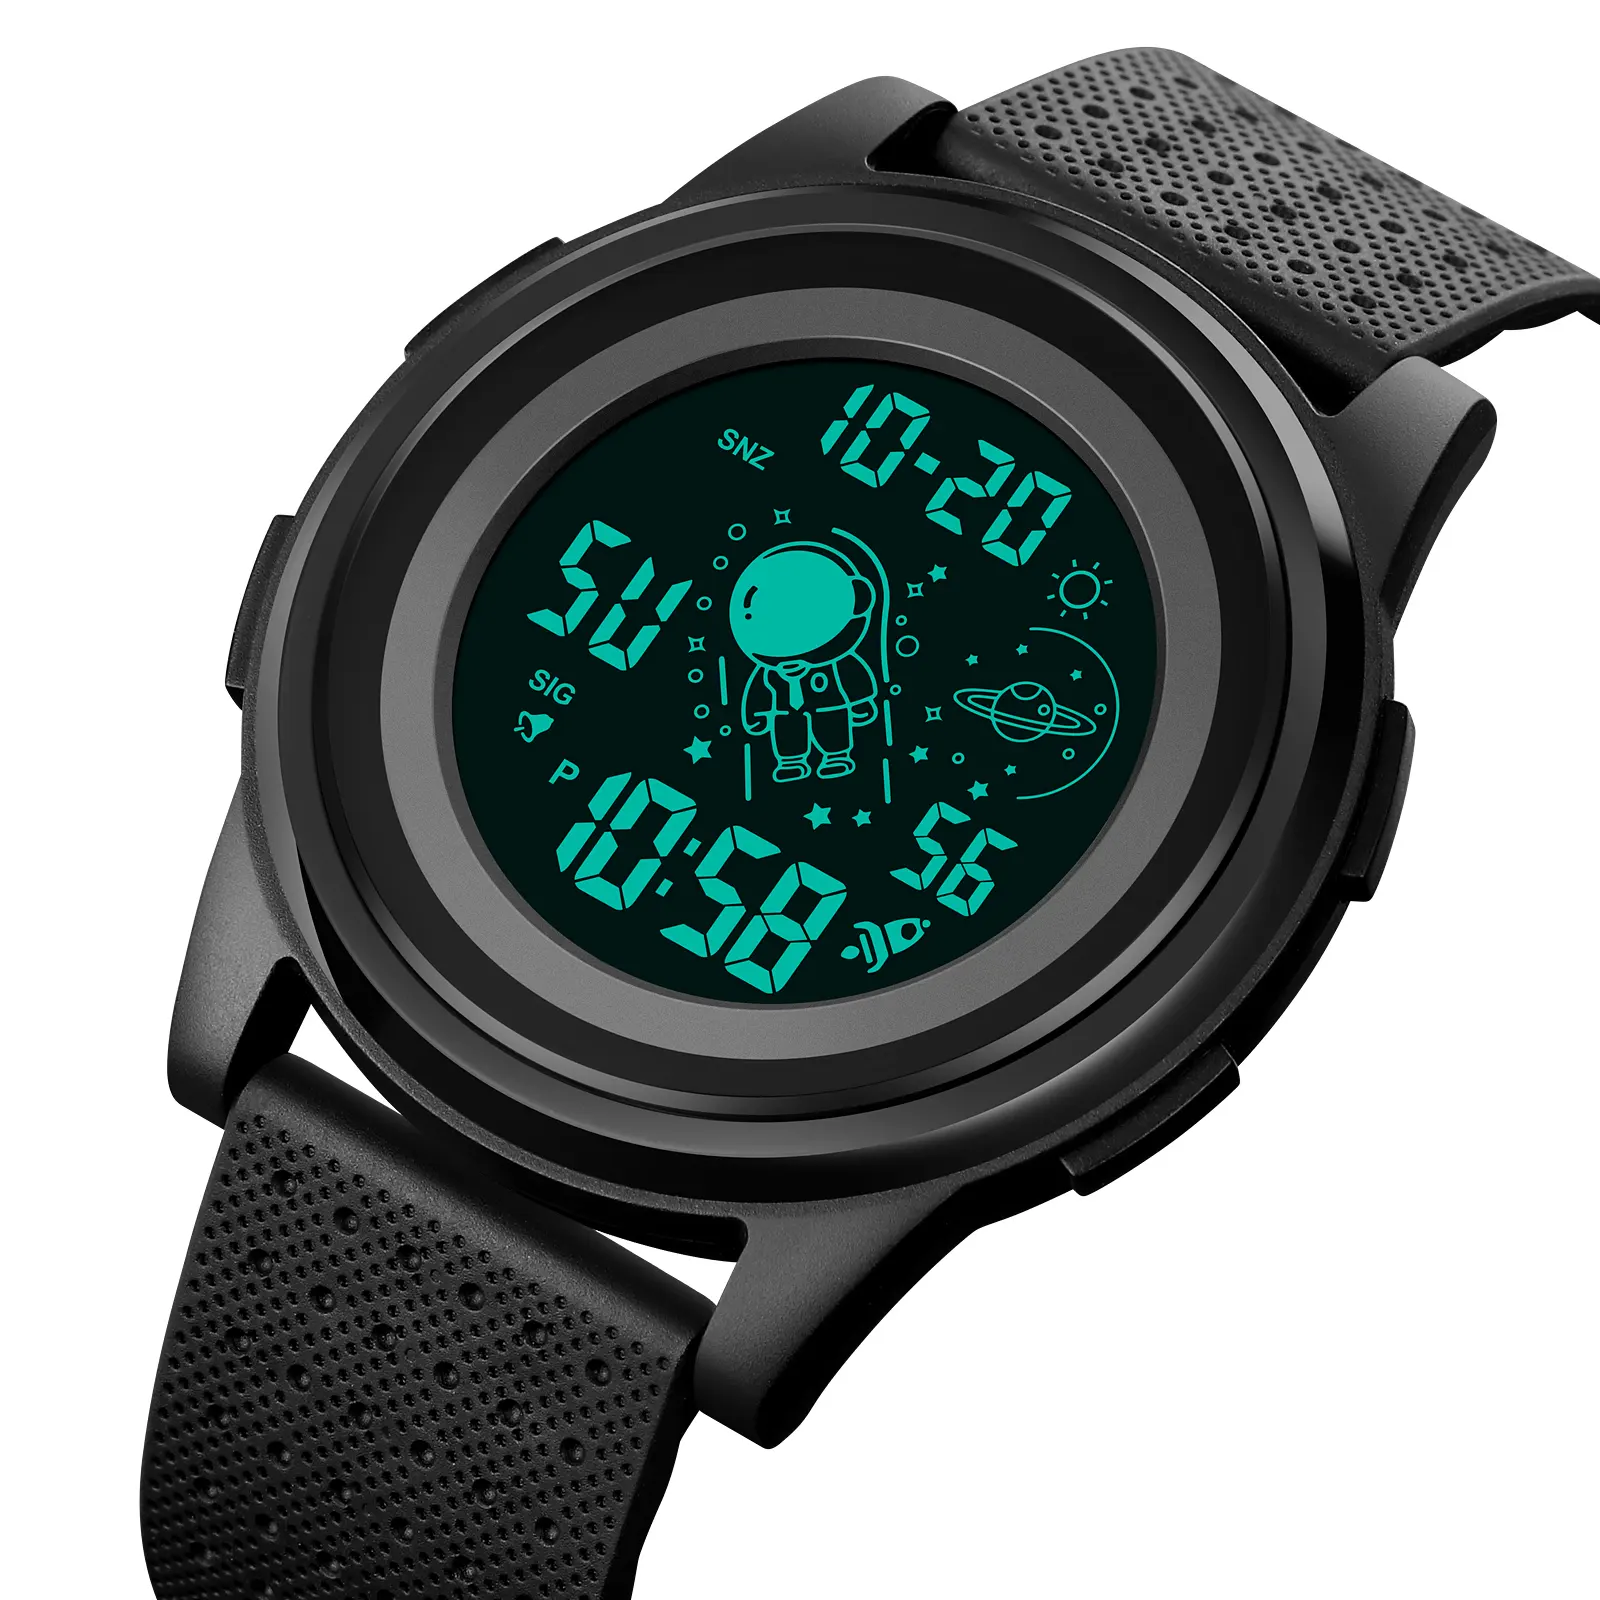 Skmei 1883 New Wrist Watch horloges Ultra-thin Dial Design Sports Waterproof Led Luminous Digital Watch Men Cheap Watch